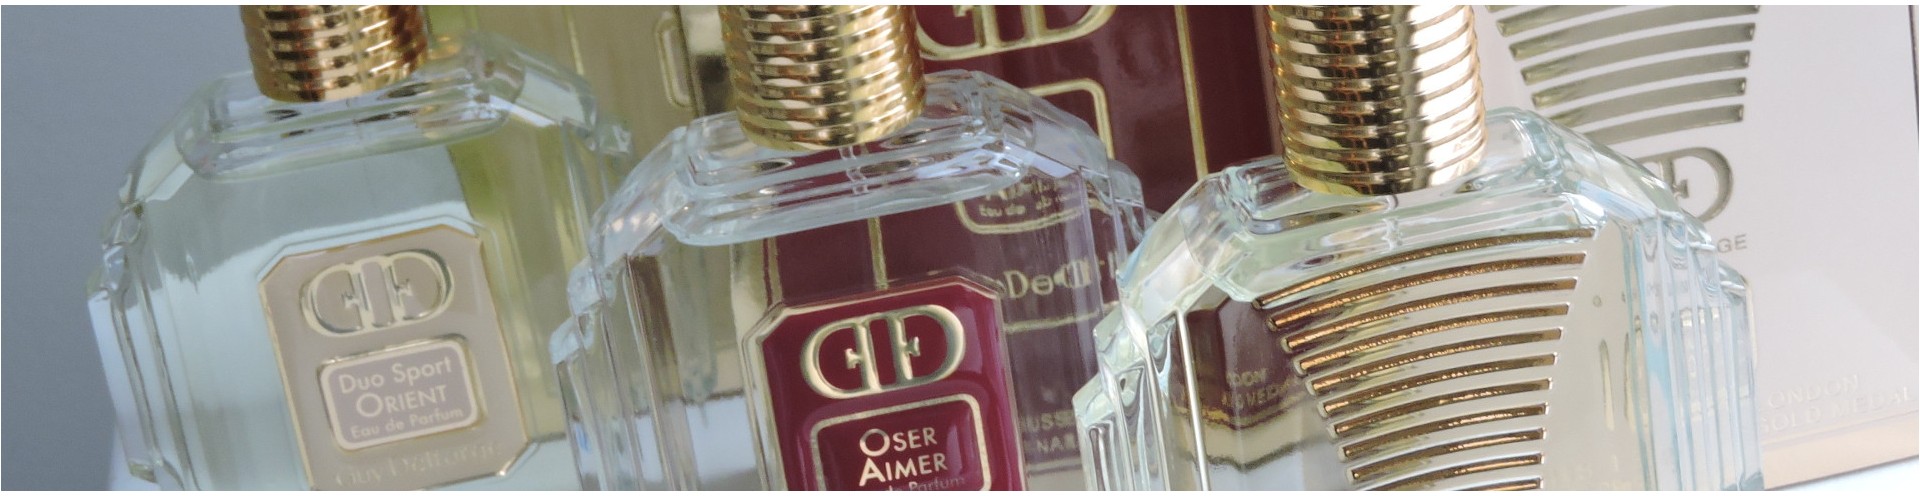 Parfums Guy Delforge